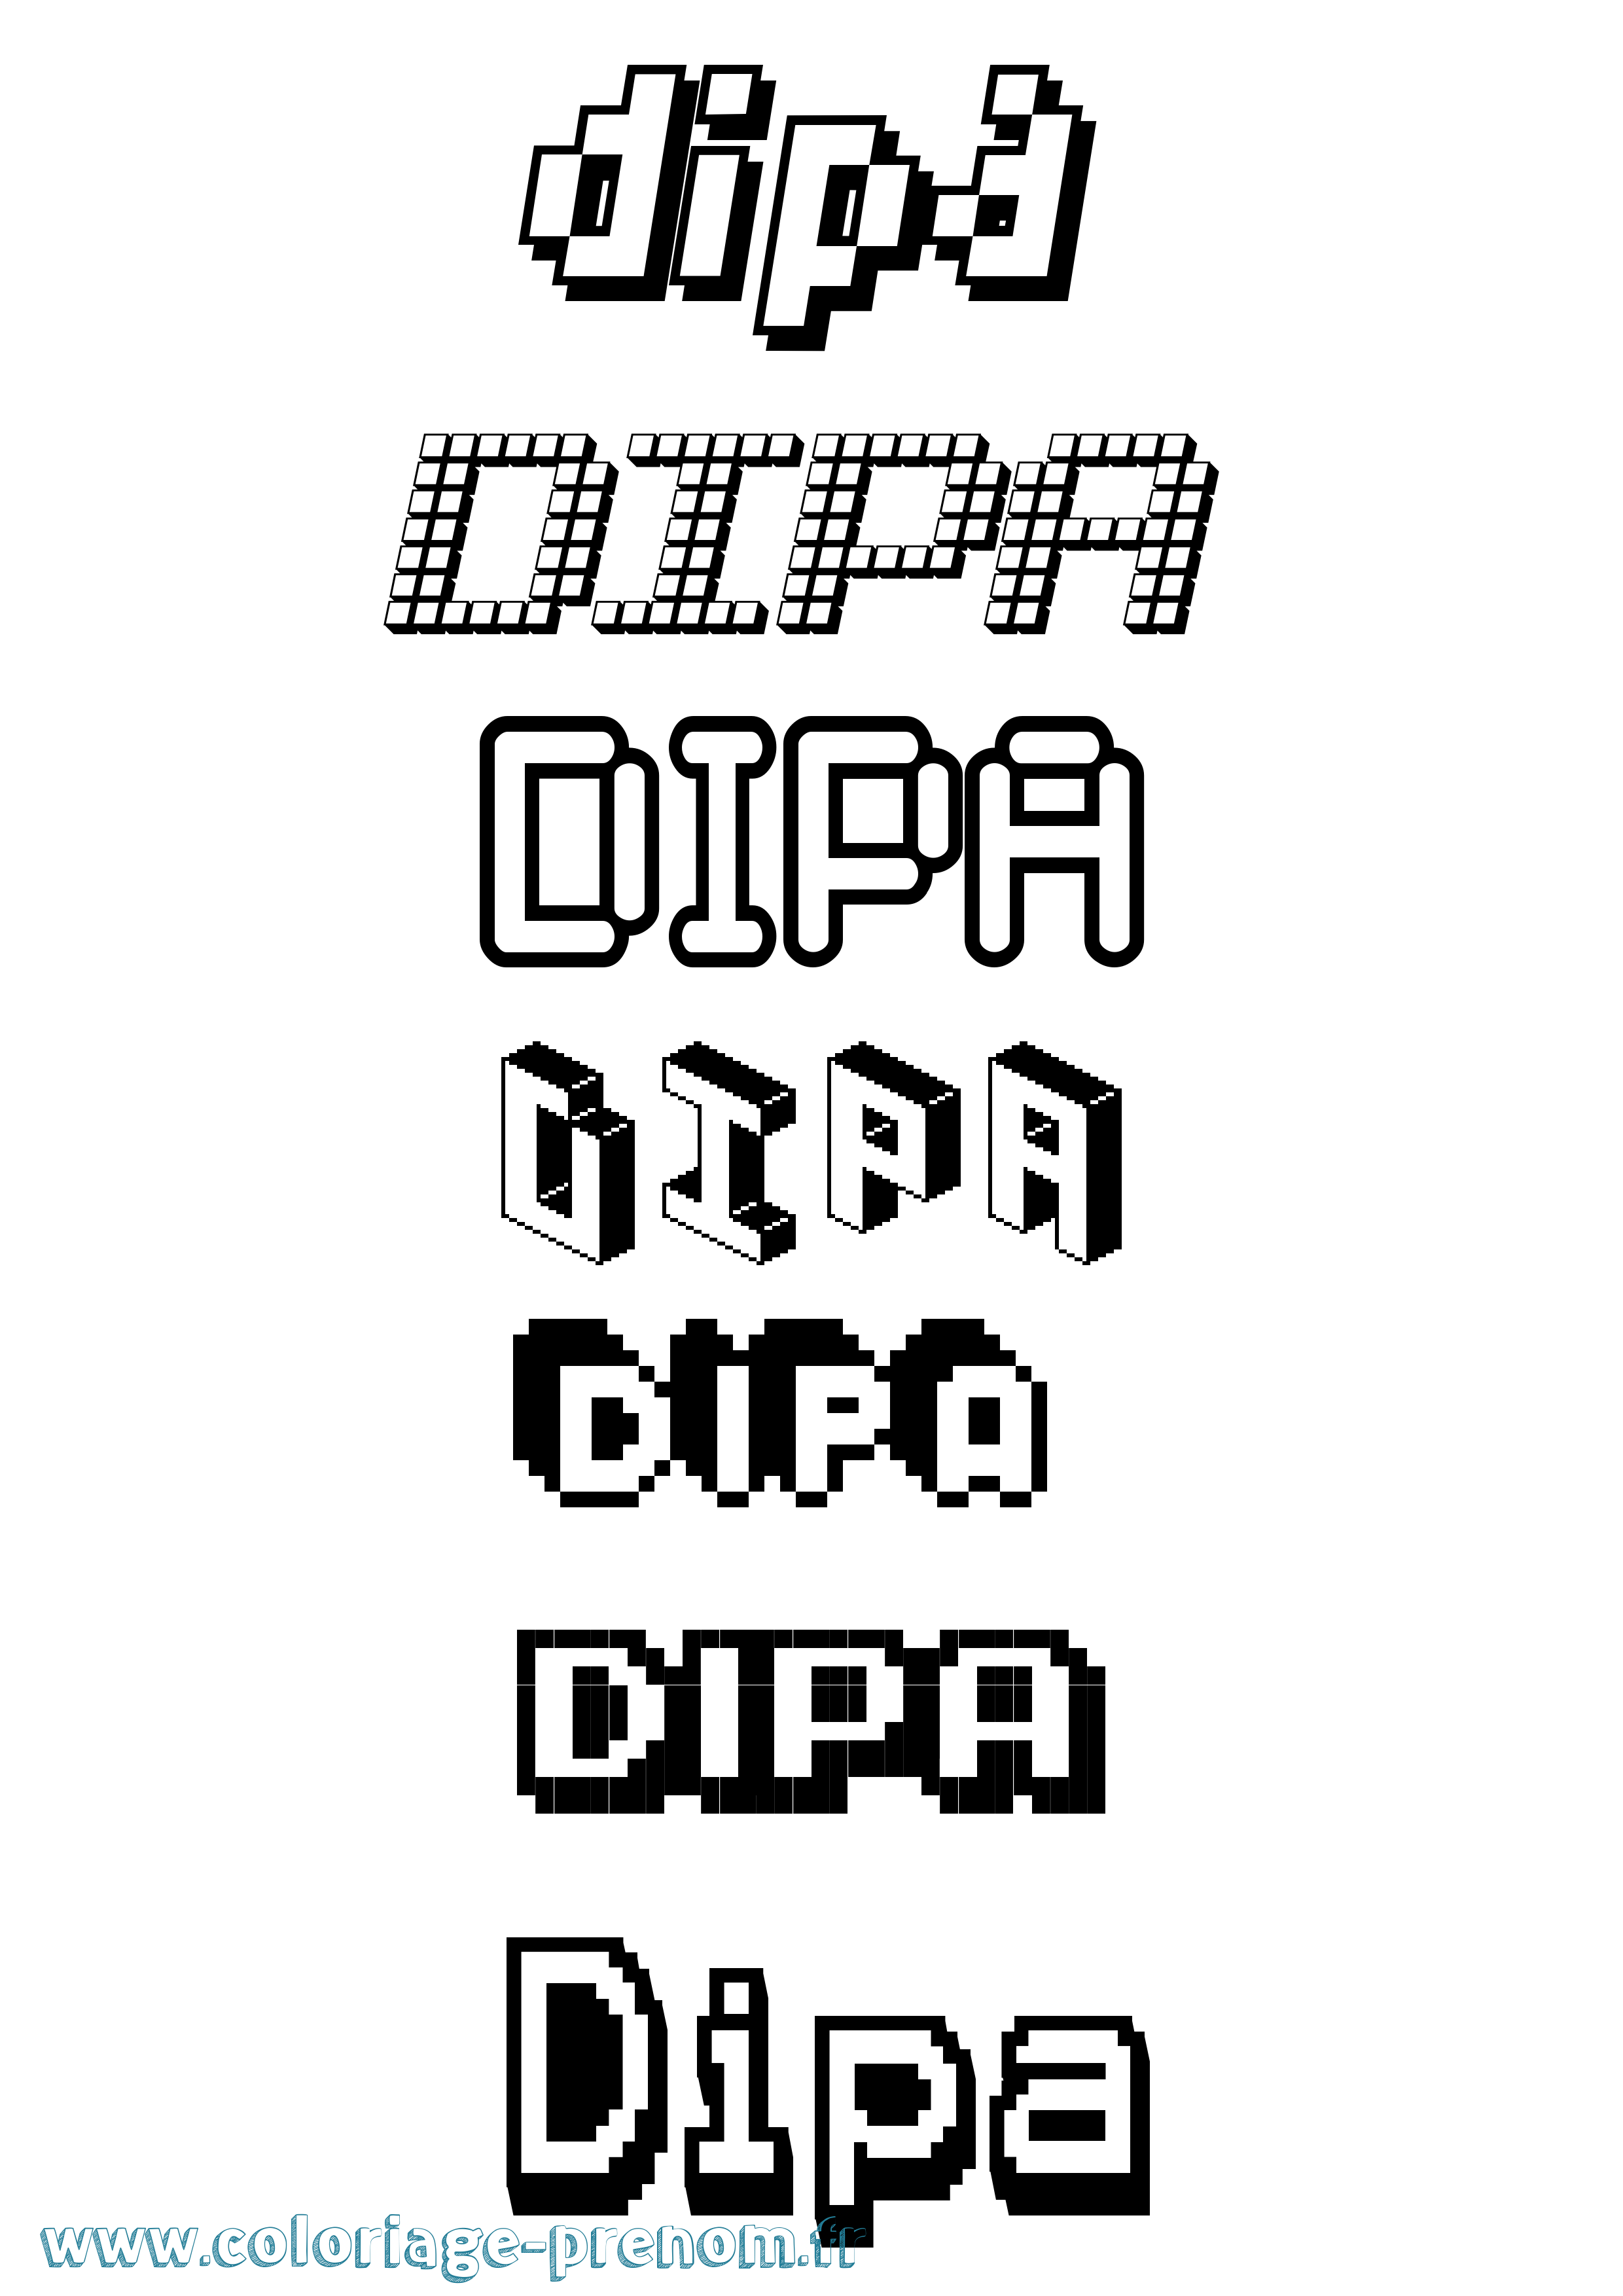 Coloriage prénom Dipa Pixel